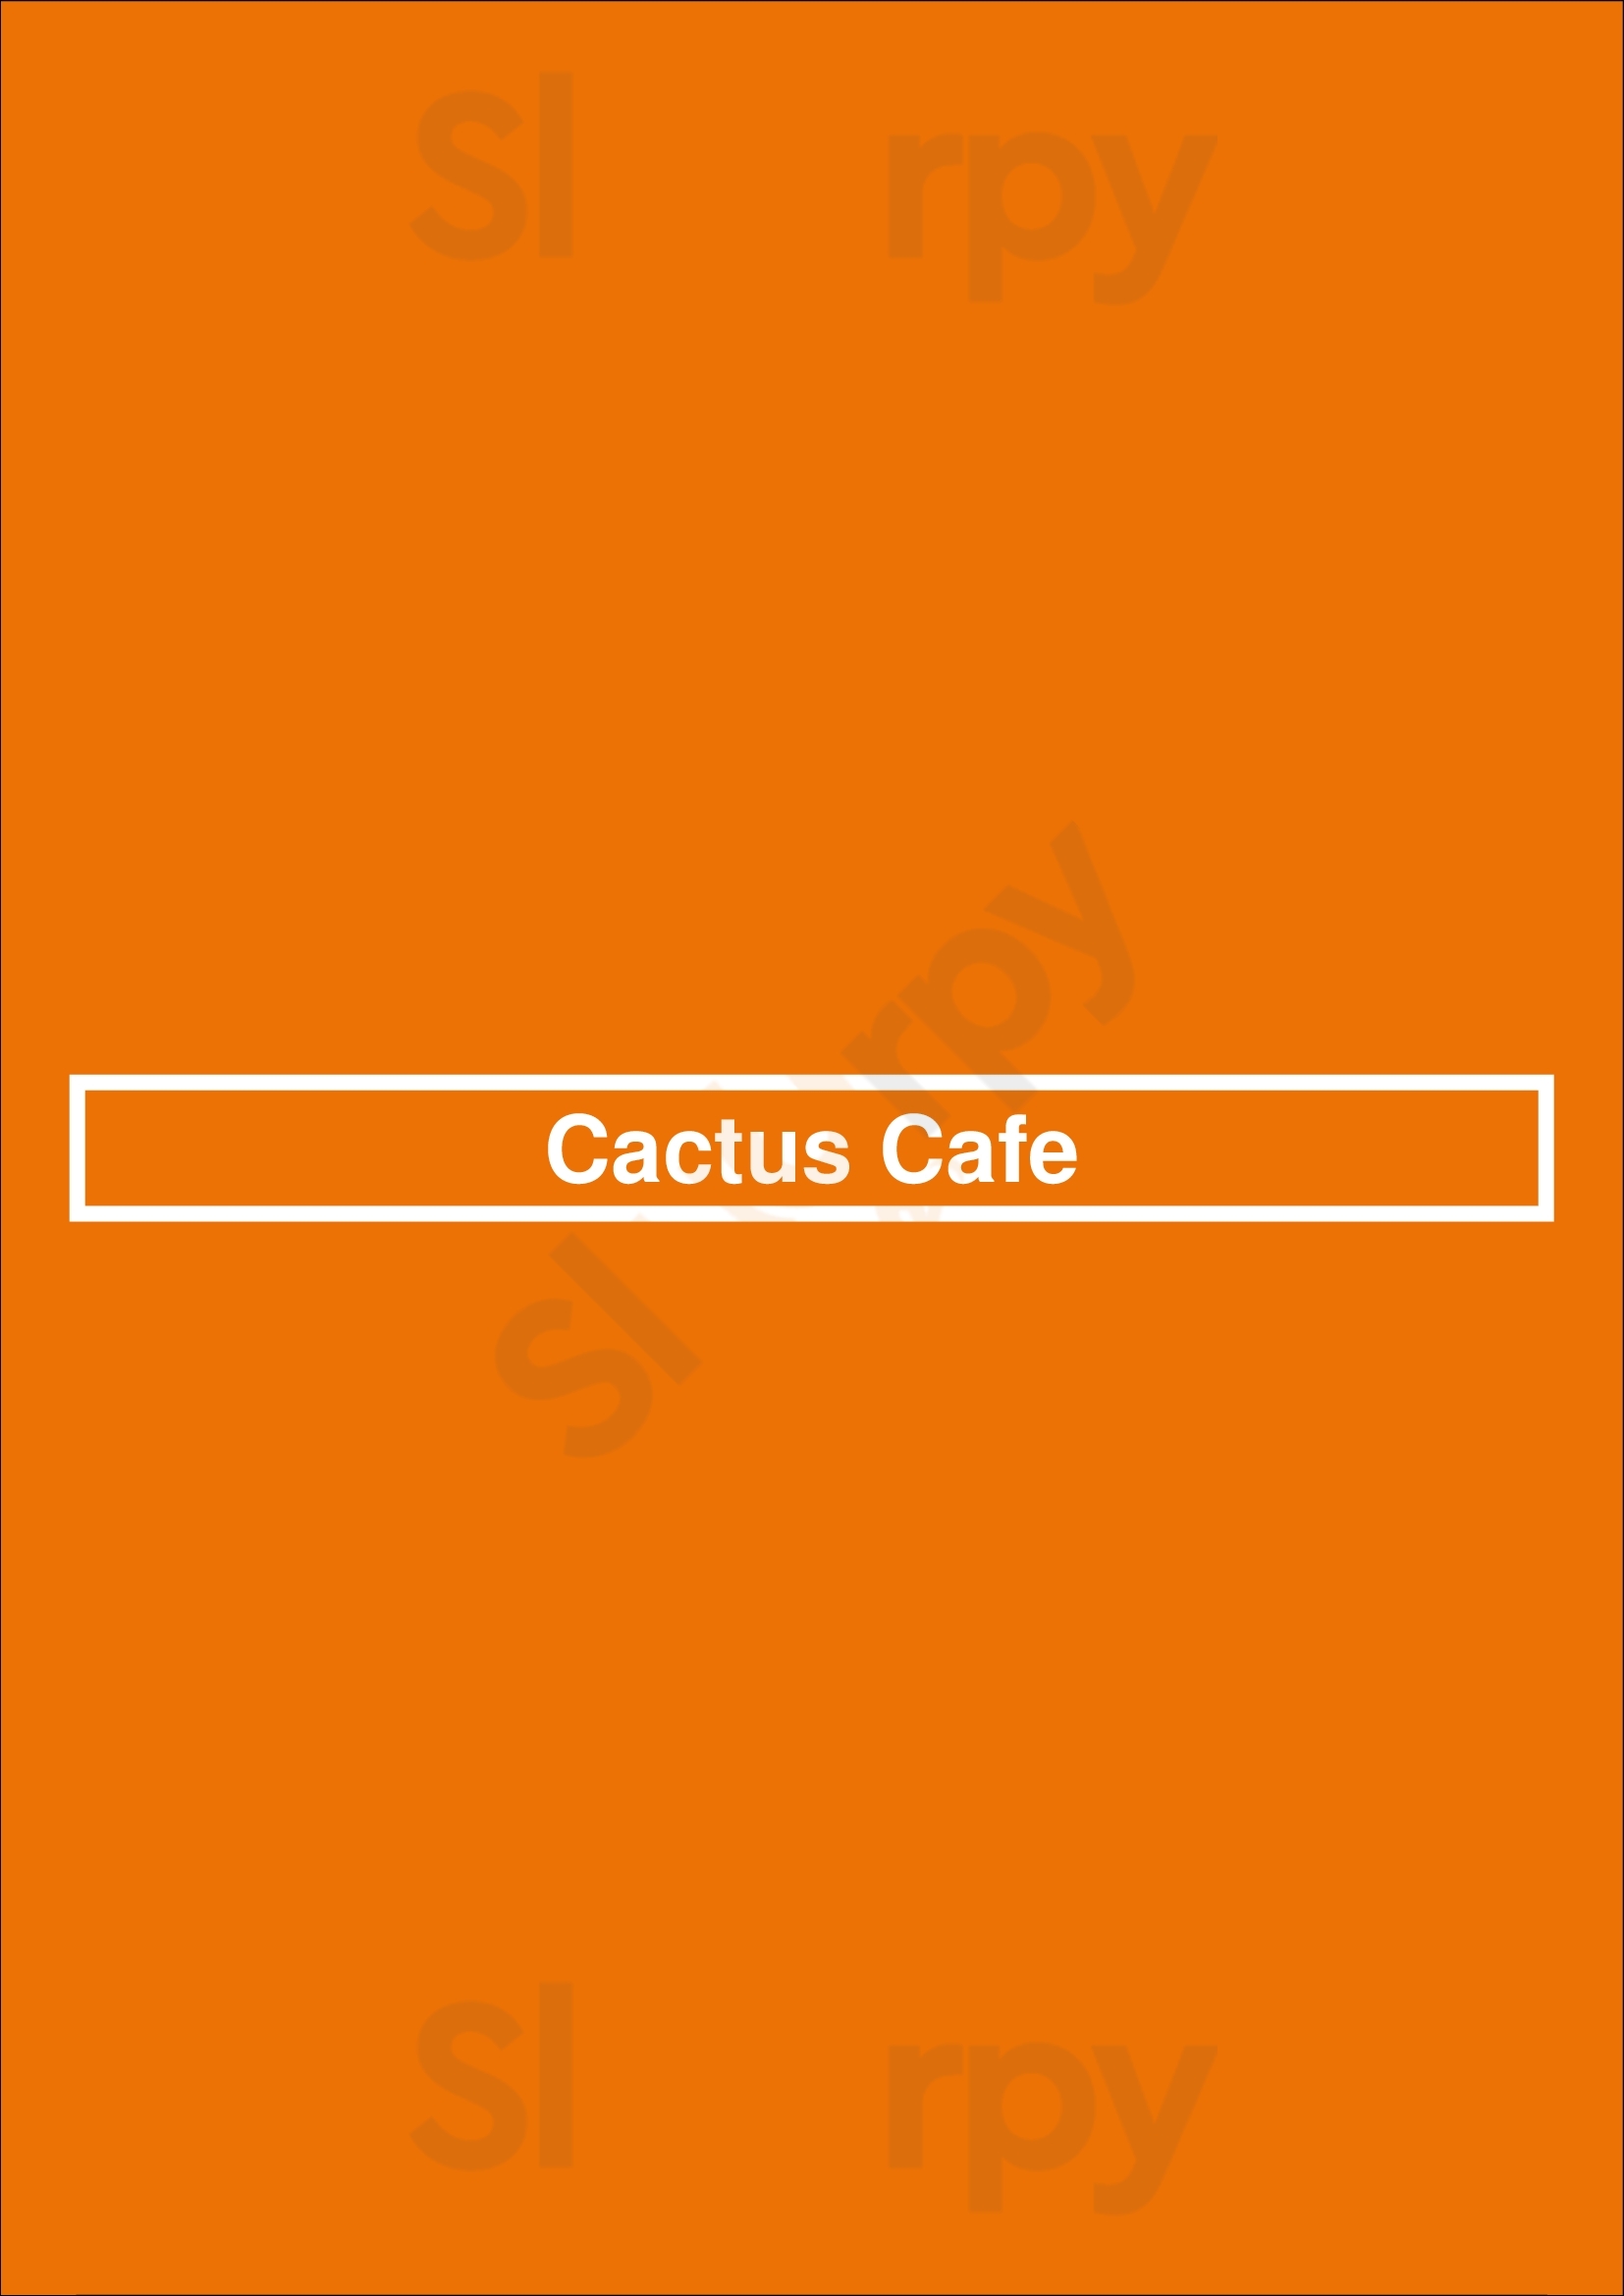 Cactus Cafe Sea Cliff Menu - 1